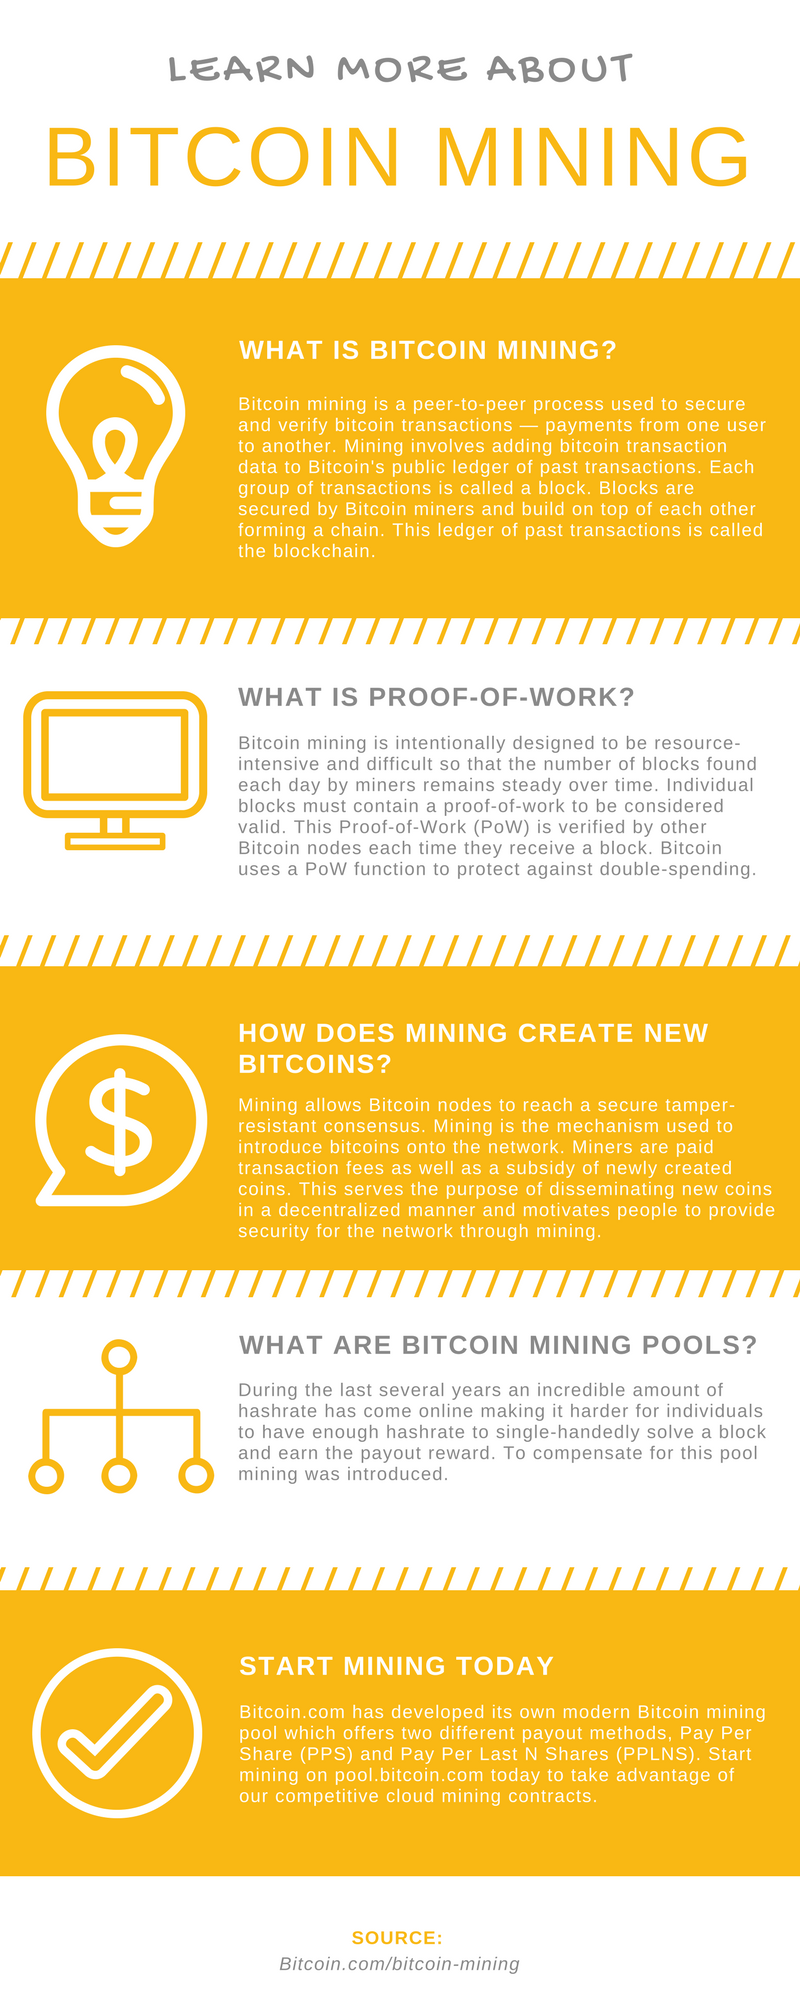 Bitcoin Mining Logo - Bitcoin Mining